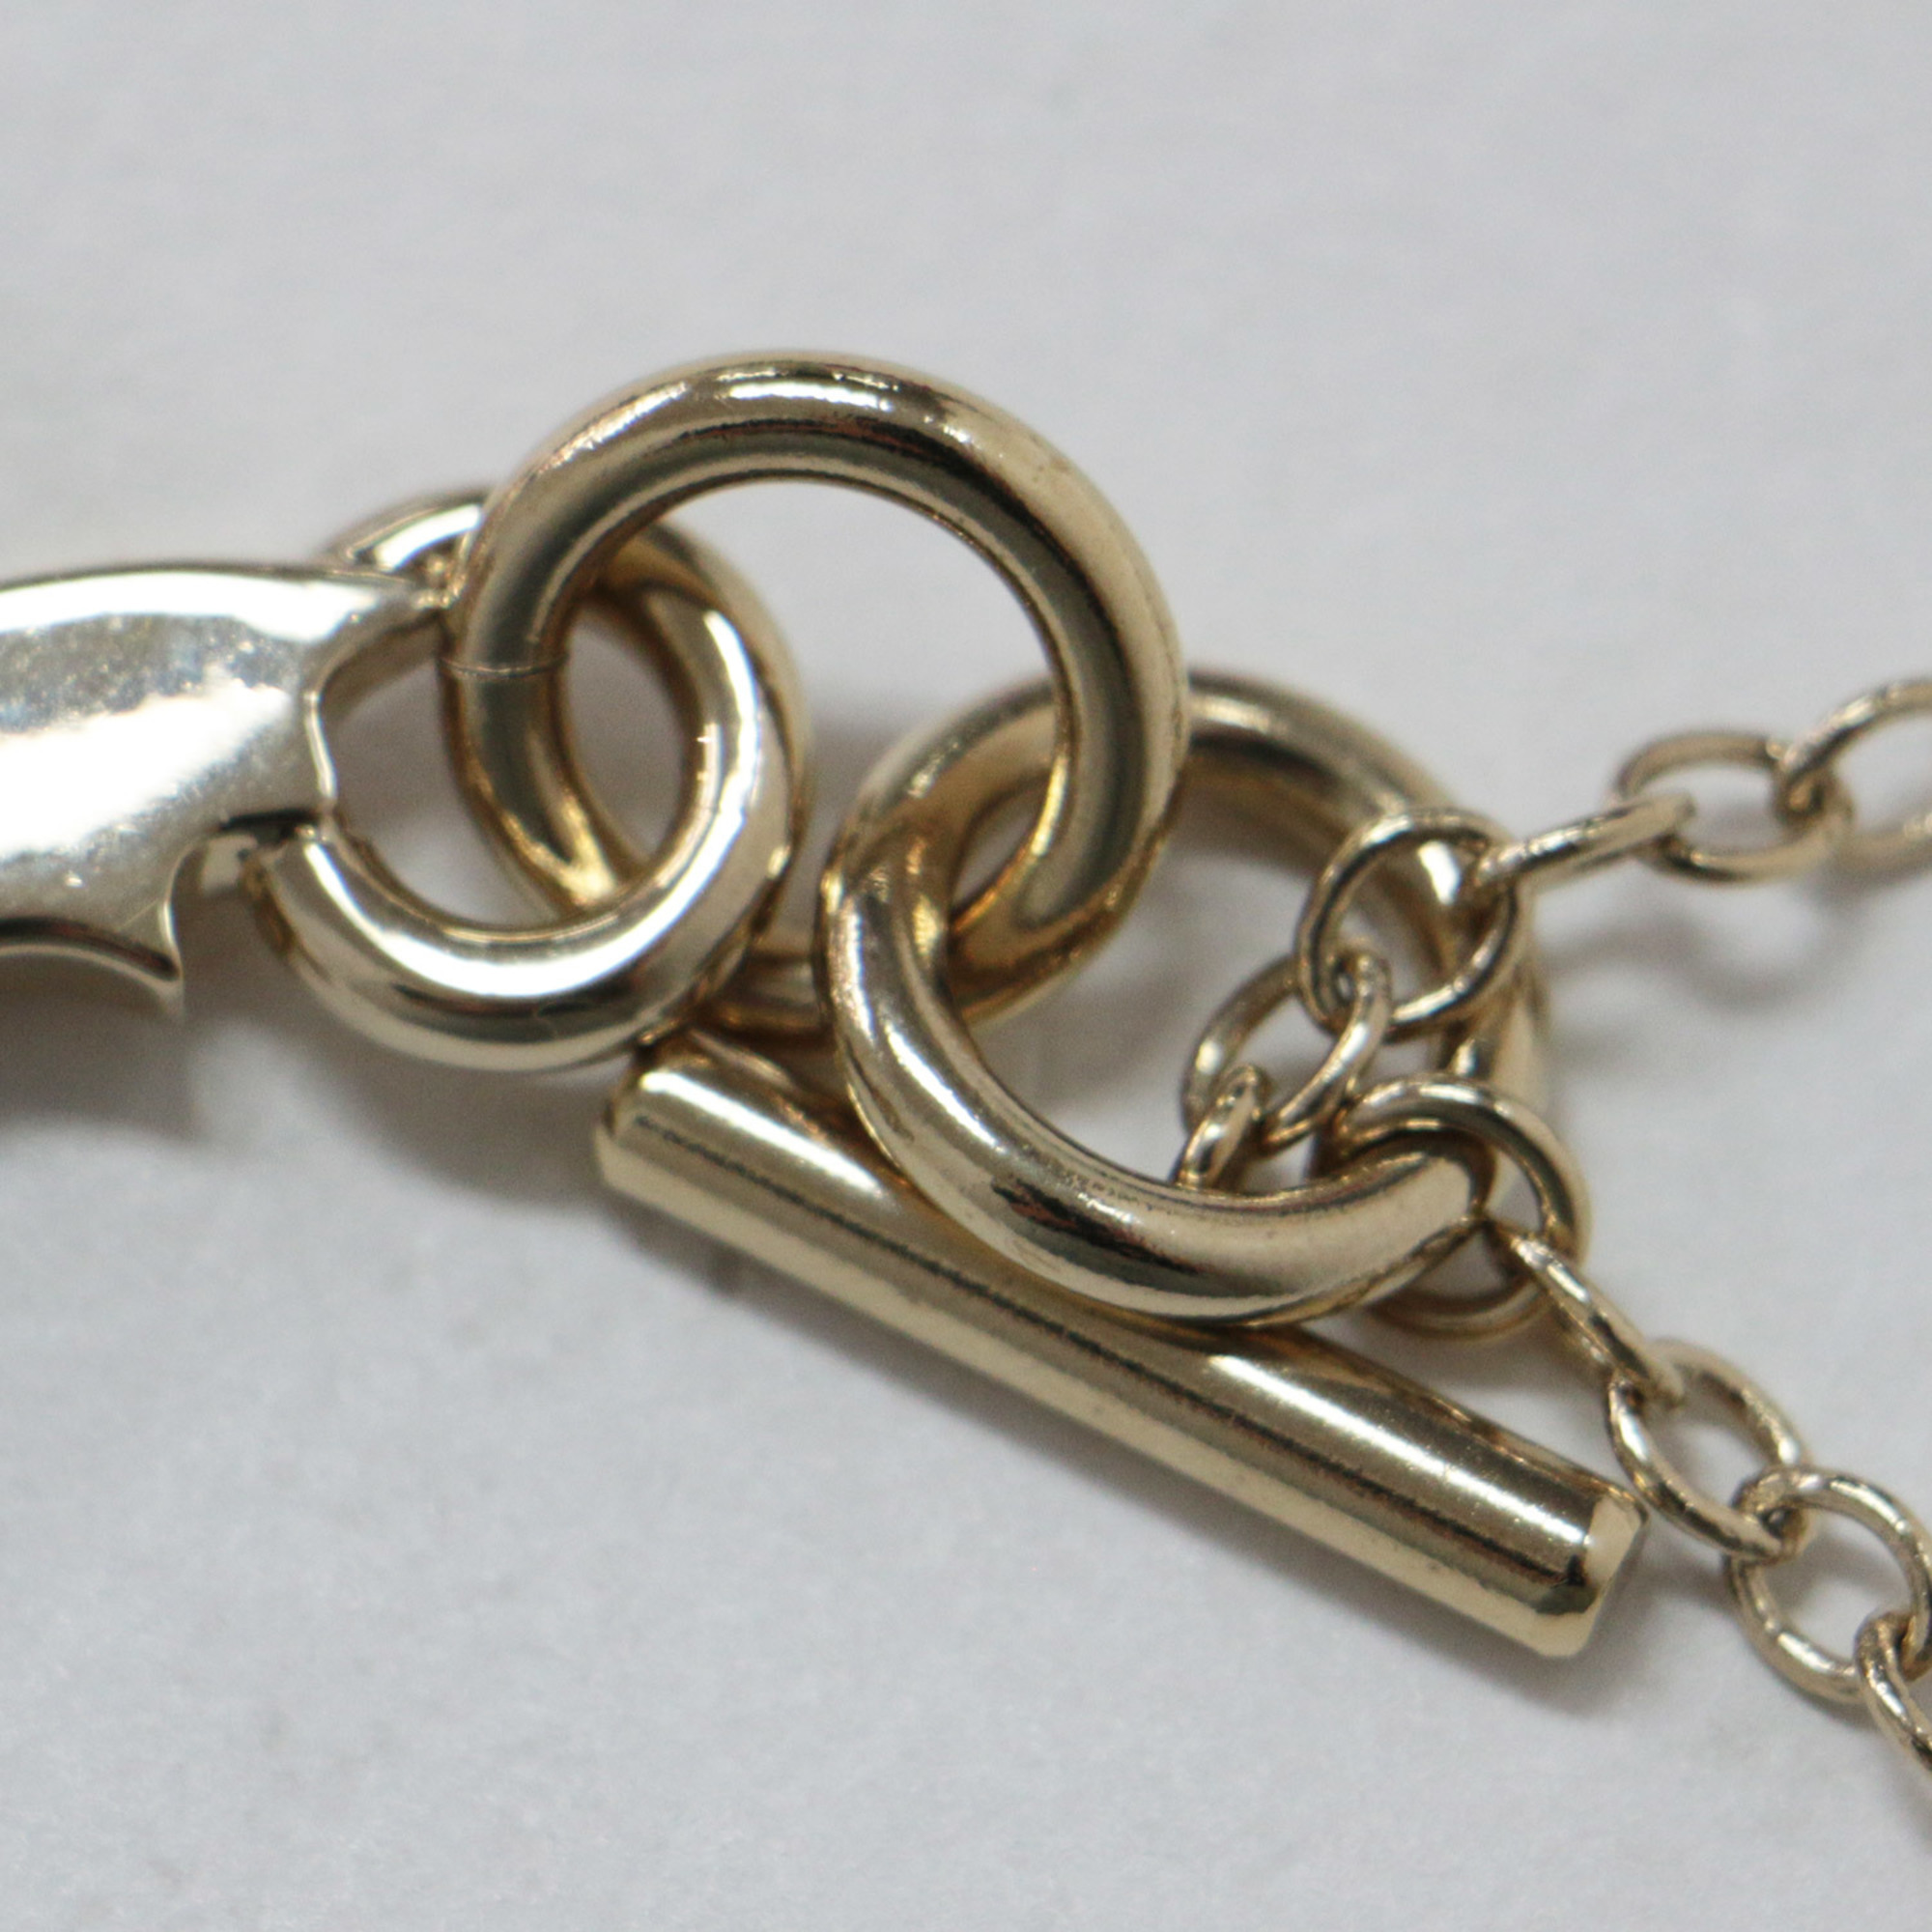 Salvatore Ferragamo Necklace Pendant Jewelry Accessory Gold Pink Orange White Chain Frog Flower Motif Rhinestone Metal